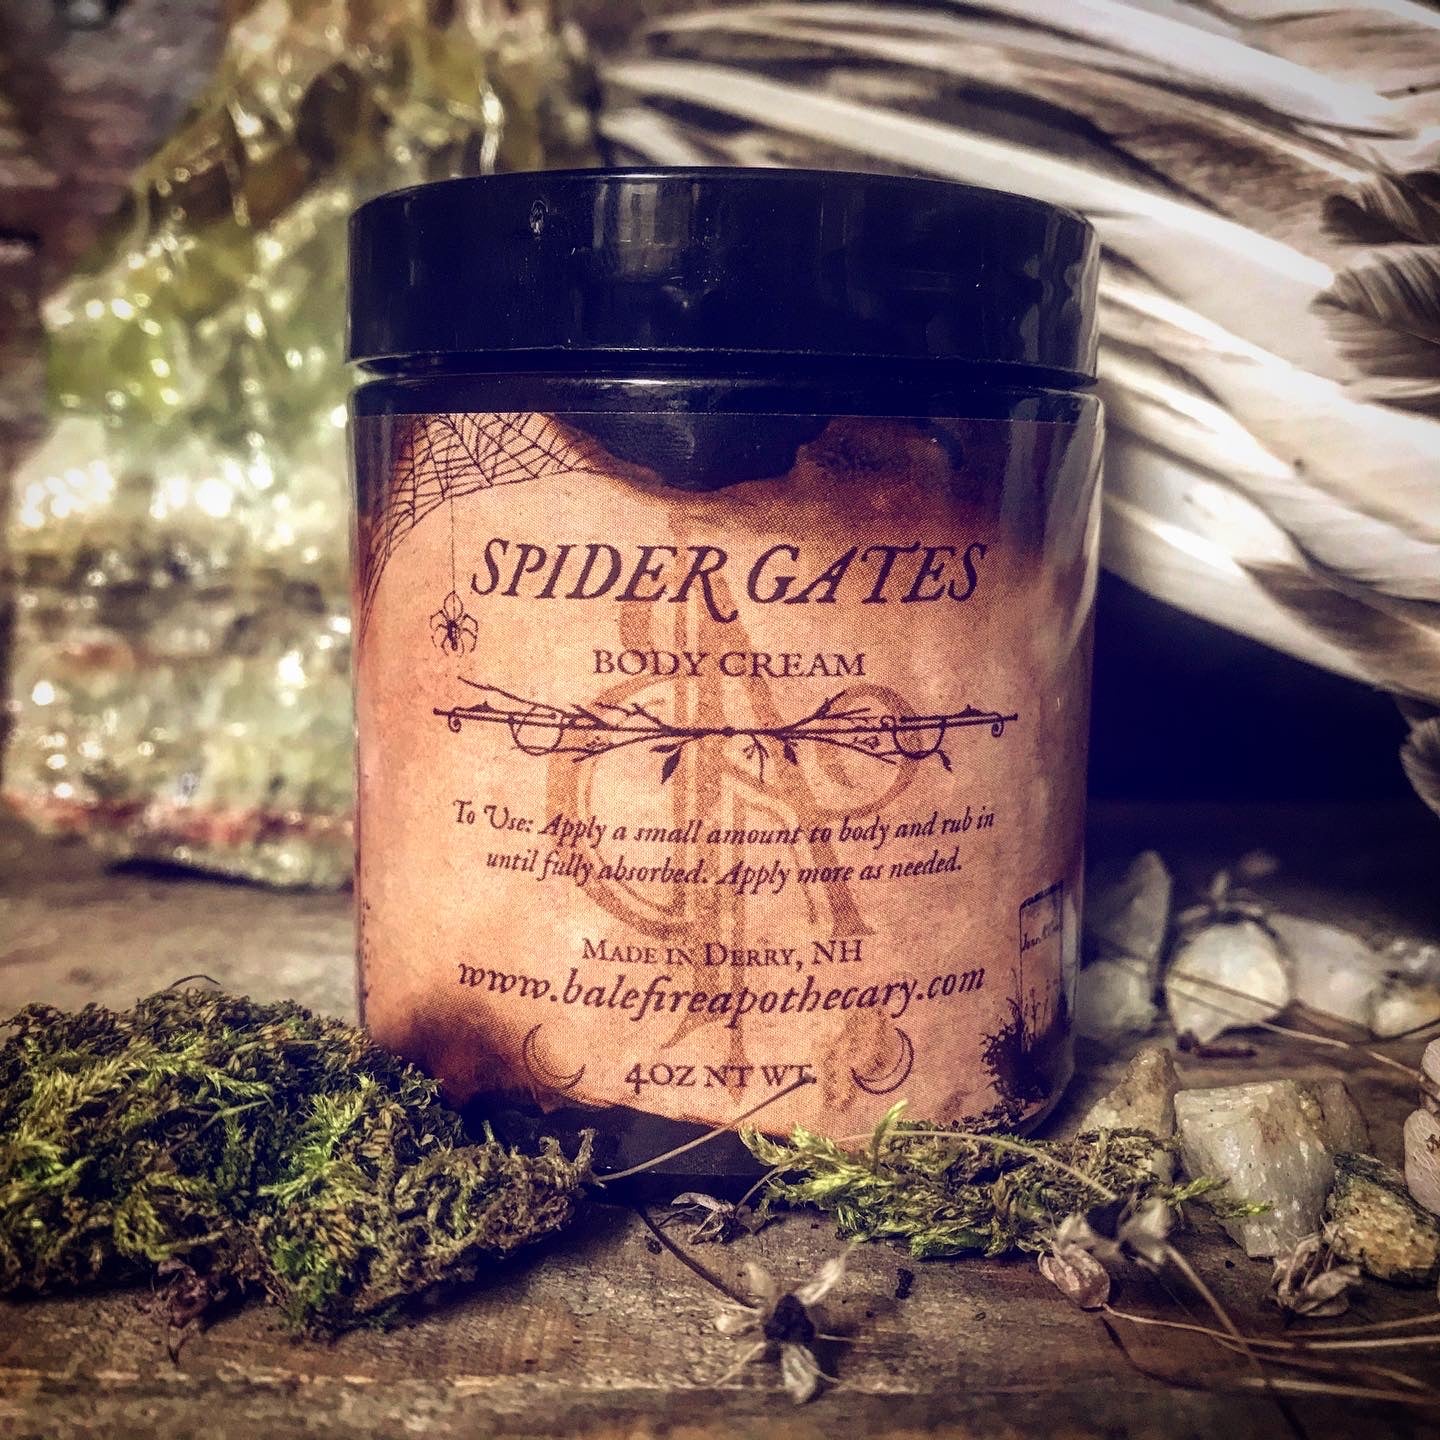 Spider Gates Body Cream